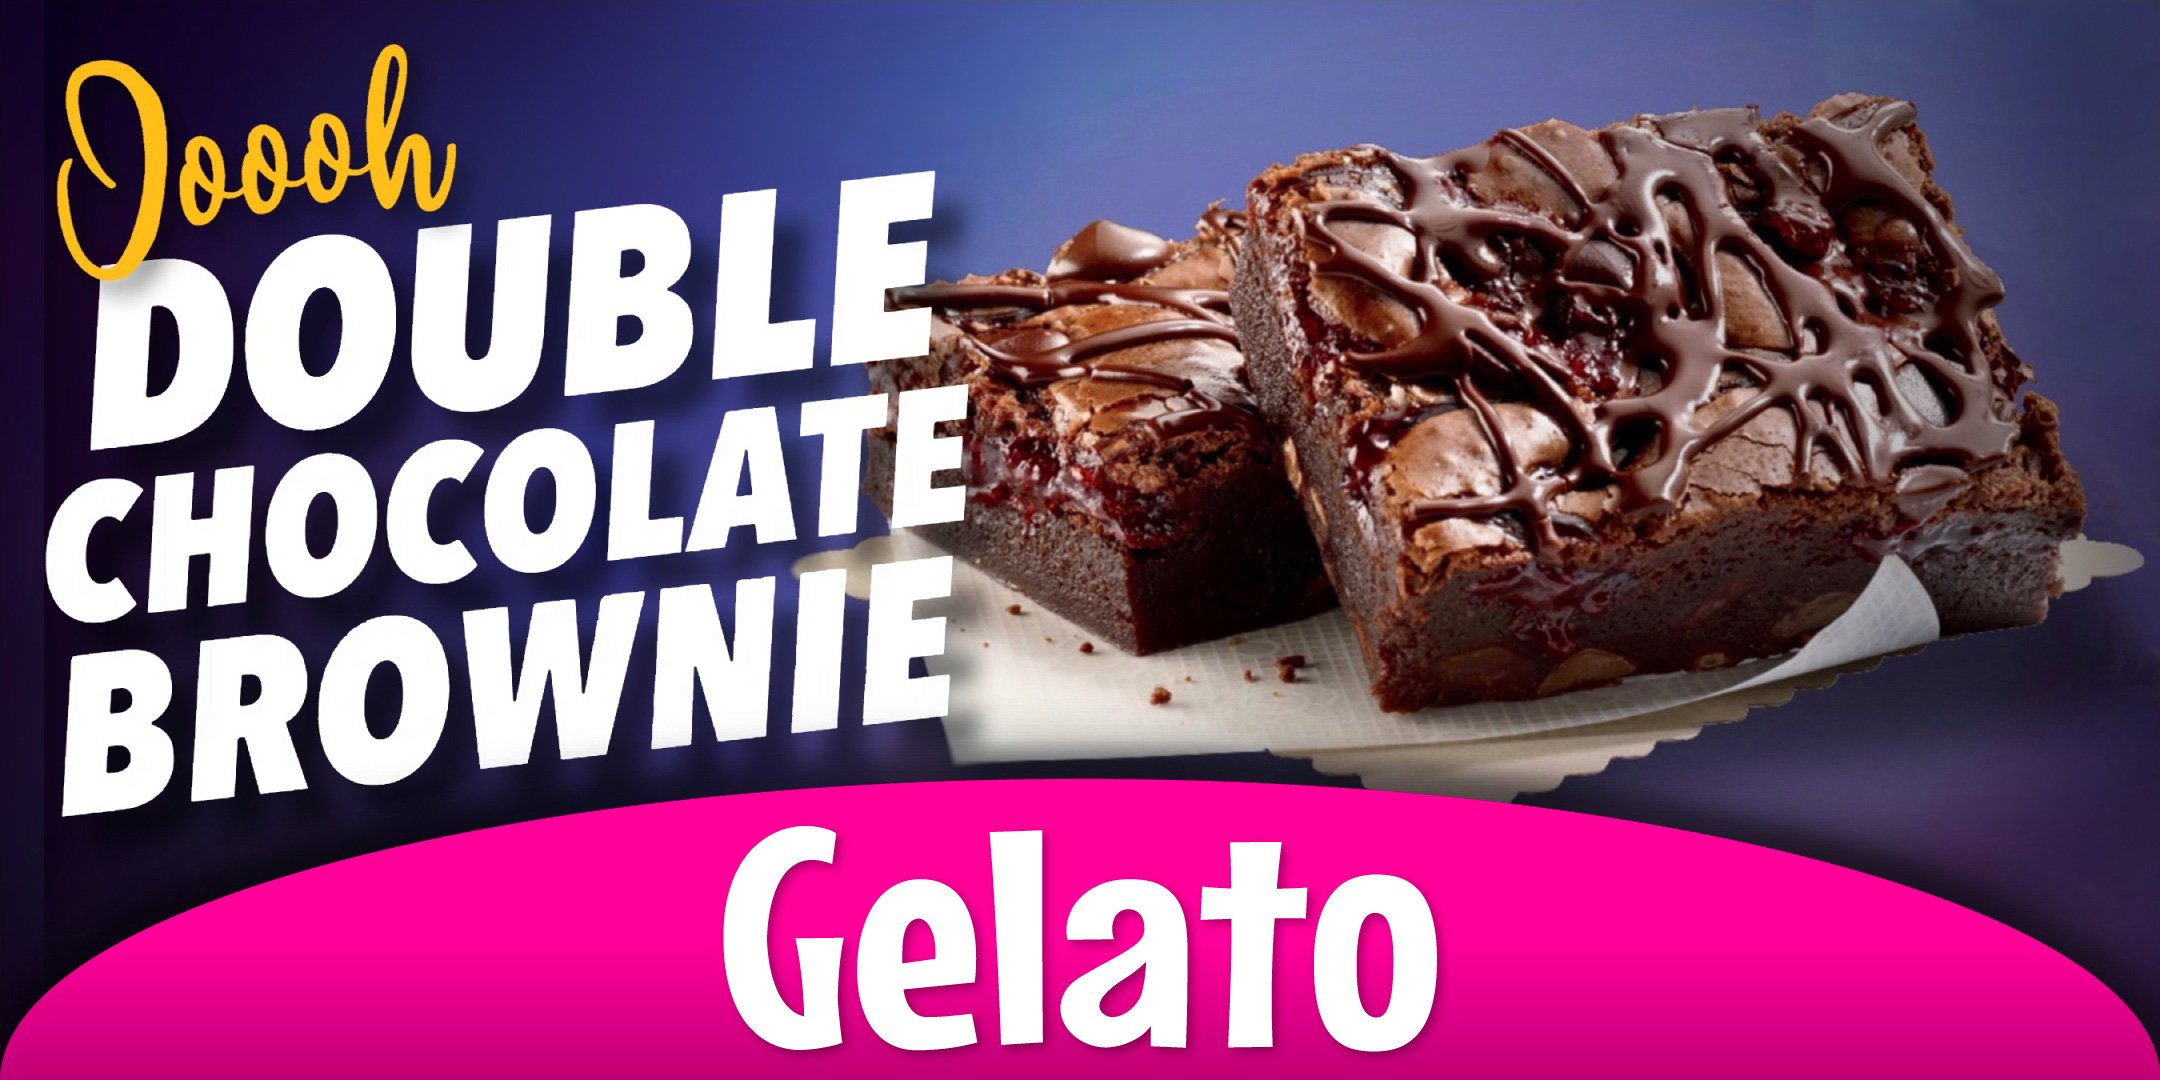 cool-king-double-chocolate-brownie-gelato.jpg